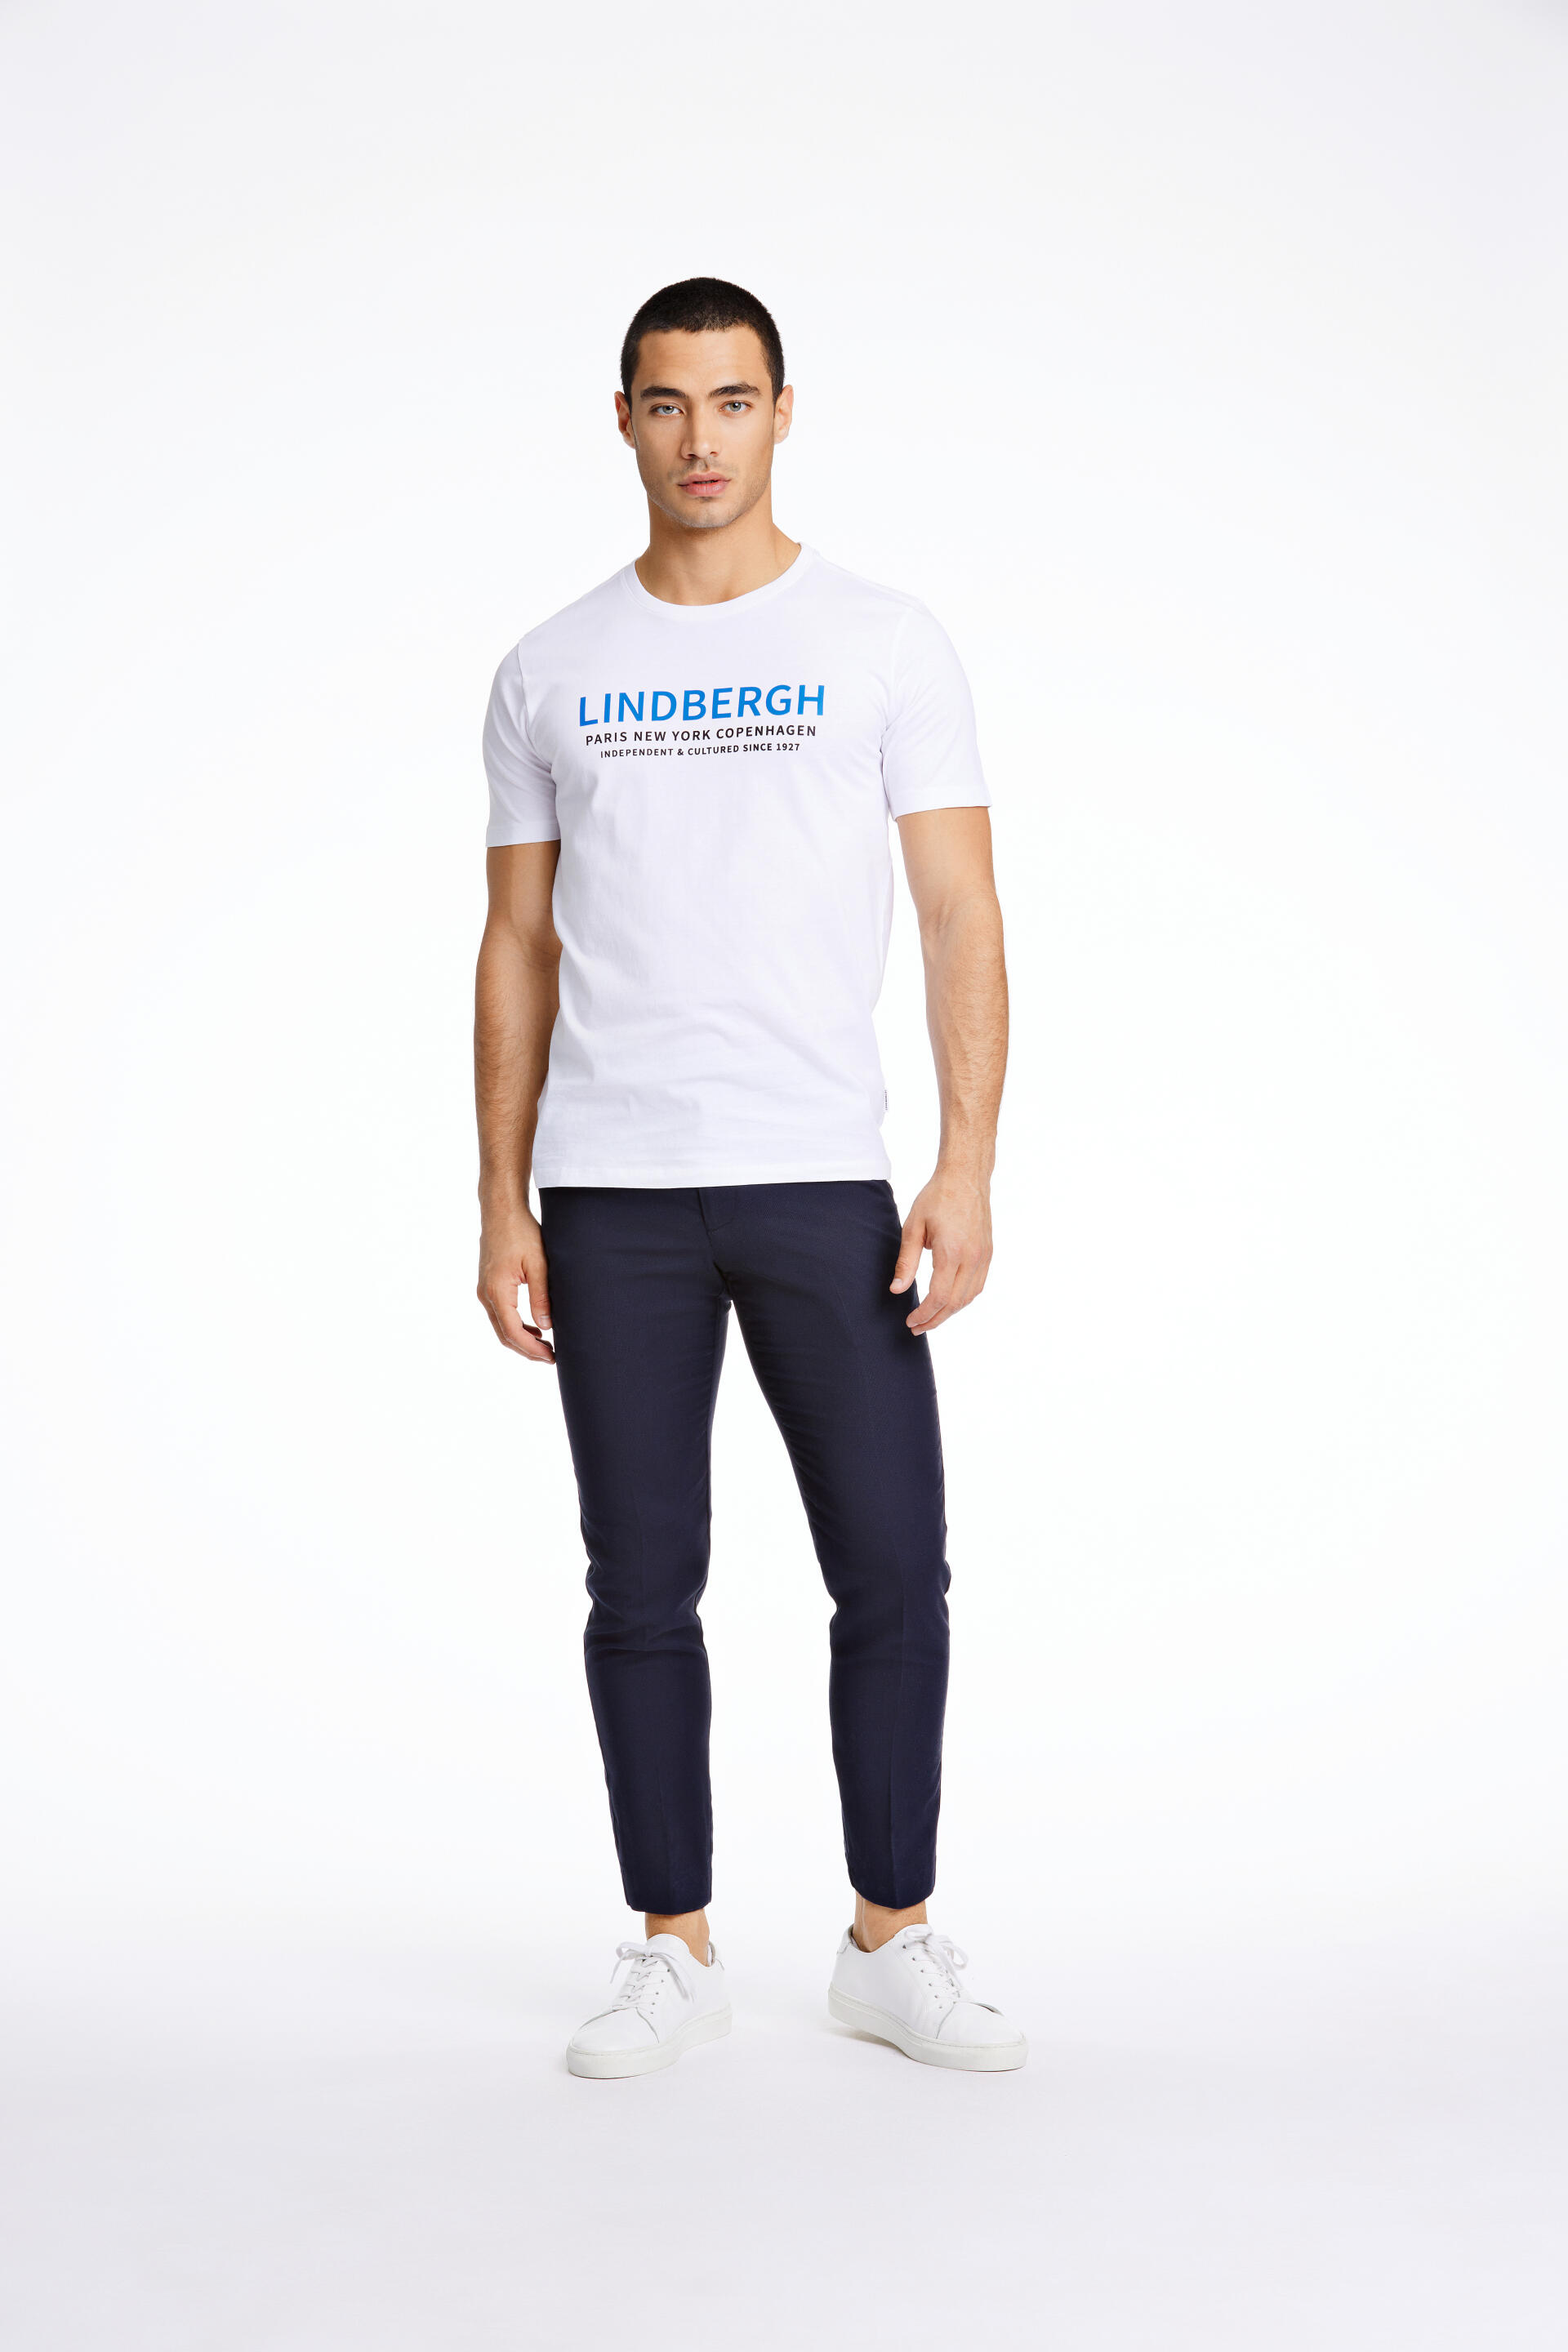 Lindbergh  Performance pants 30-006013